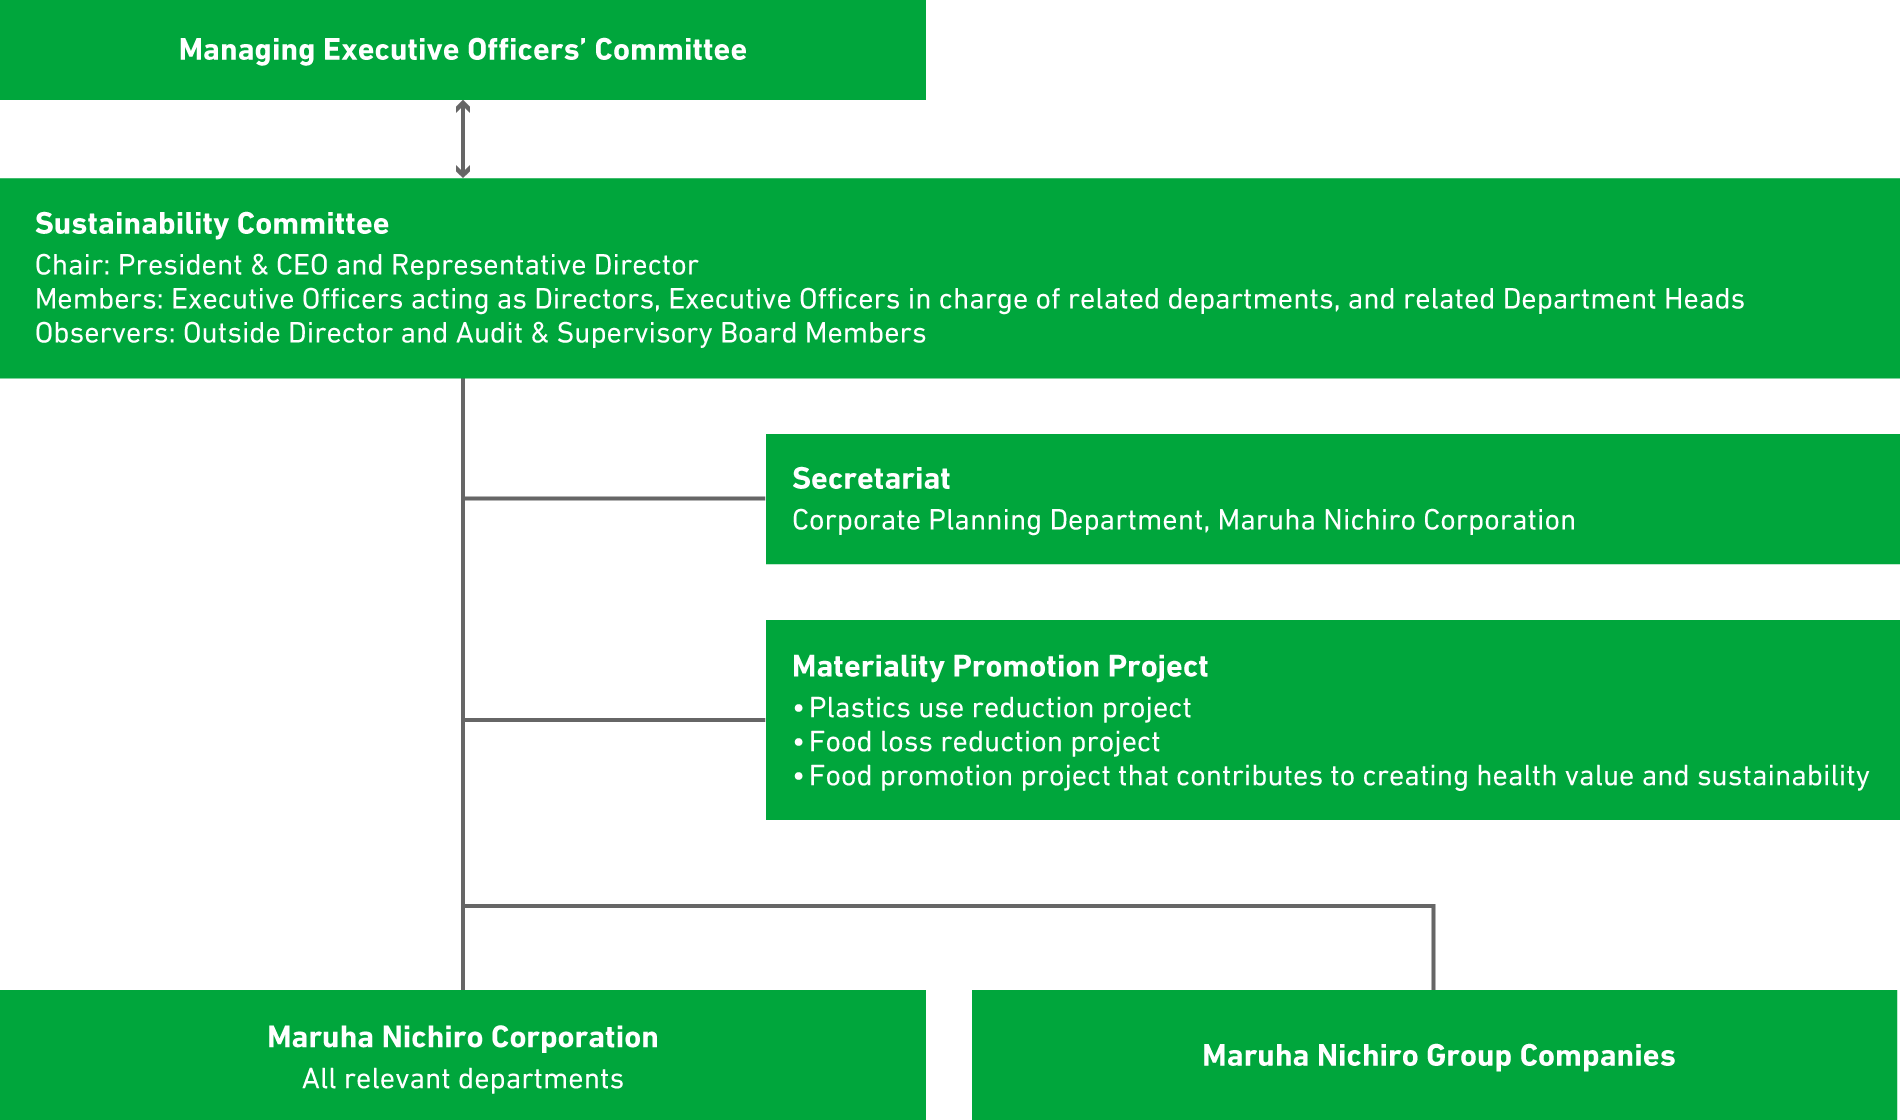 Maruha Nichiro Group Organization Structure for Sustainability Promotion